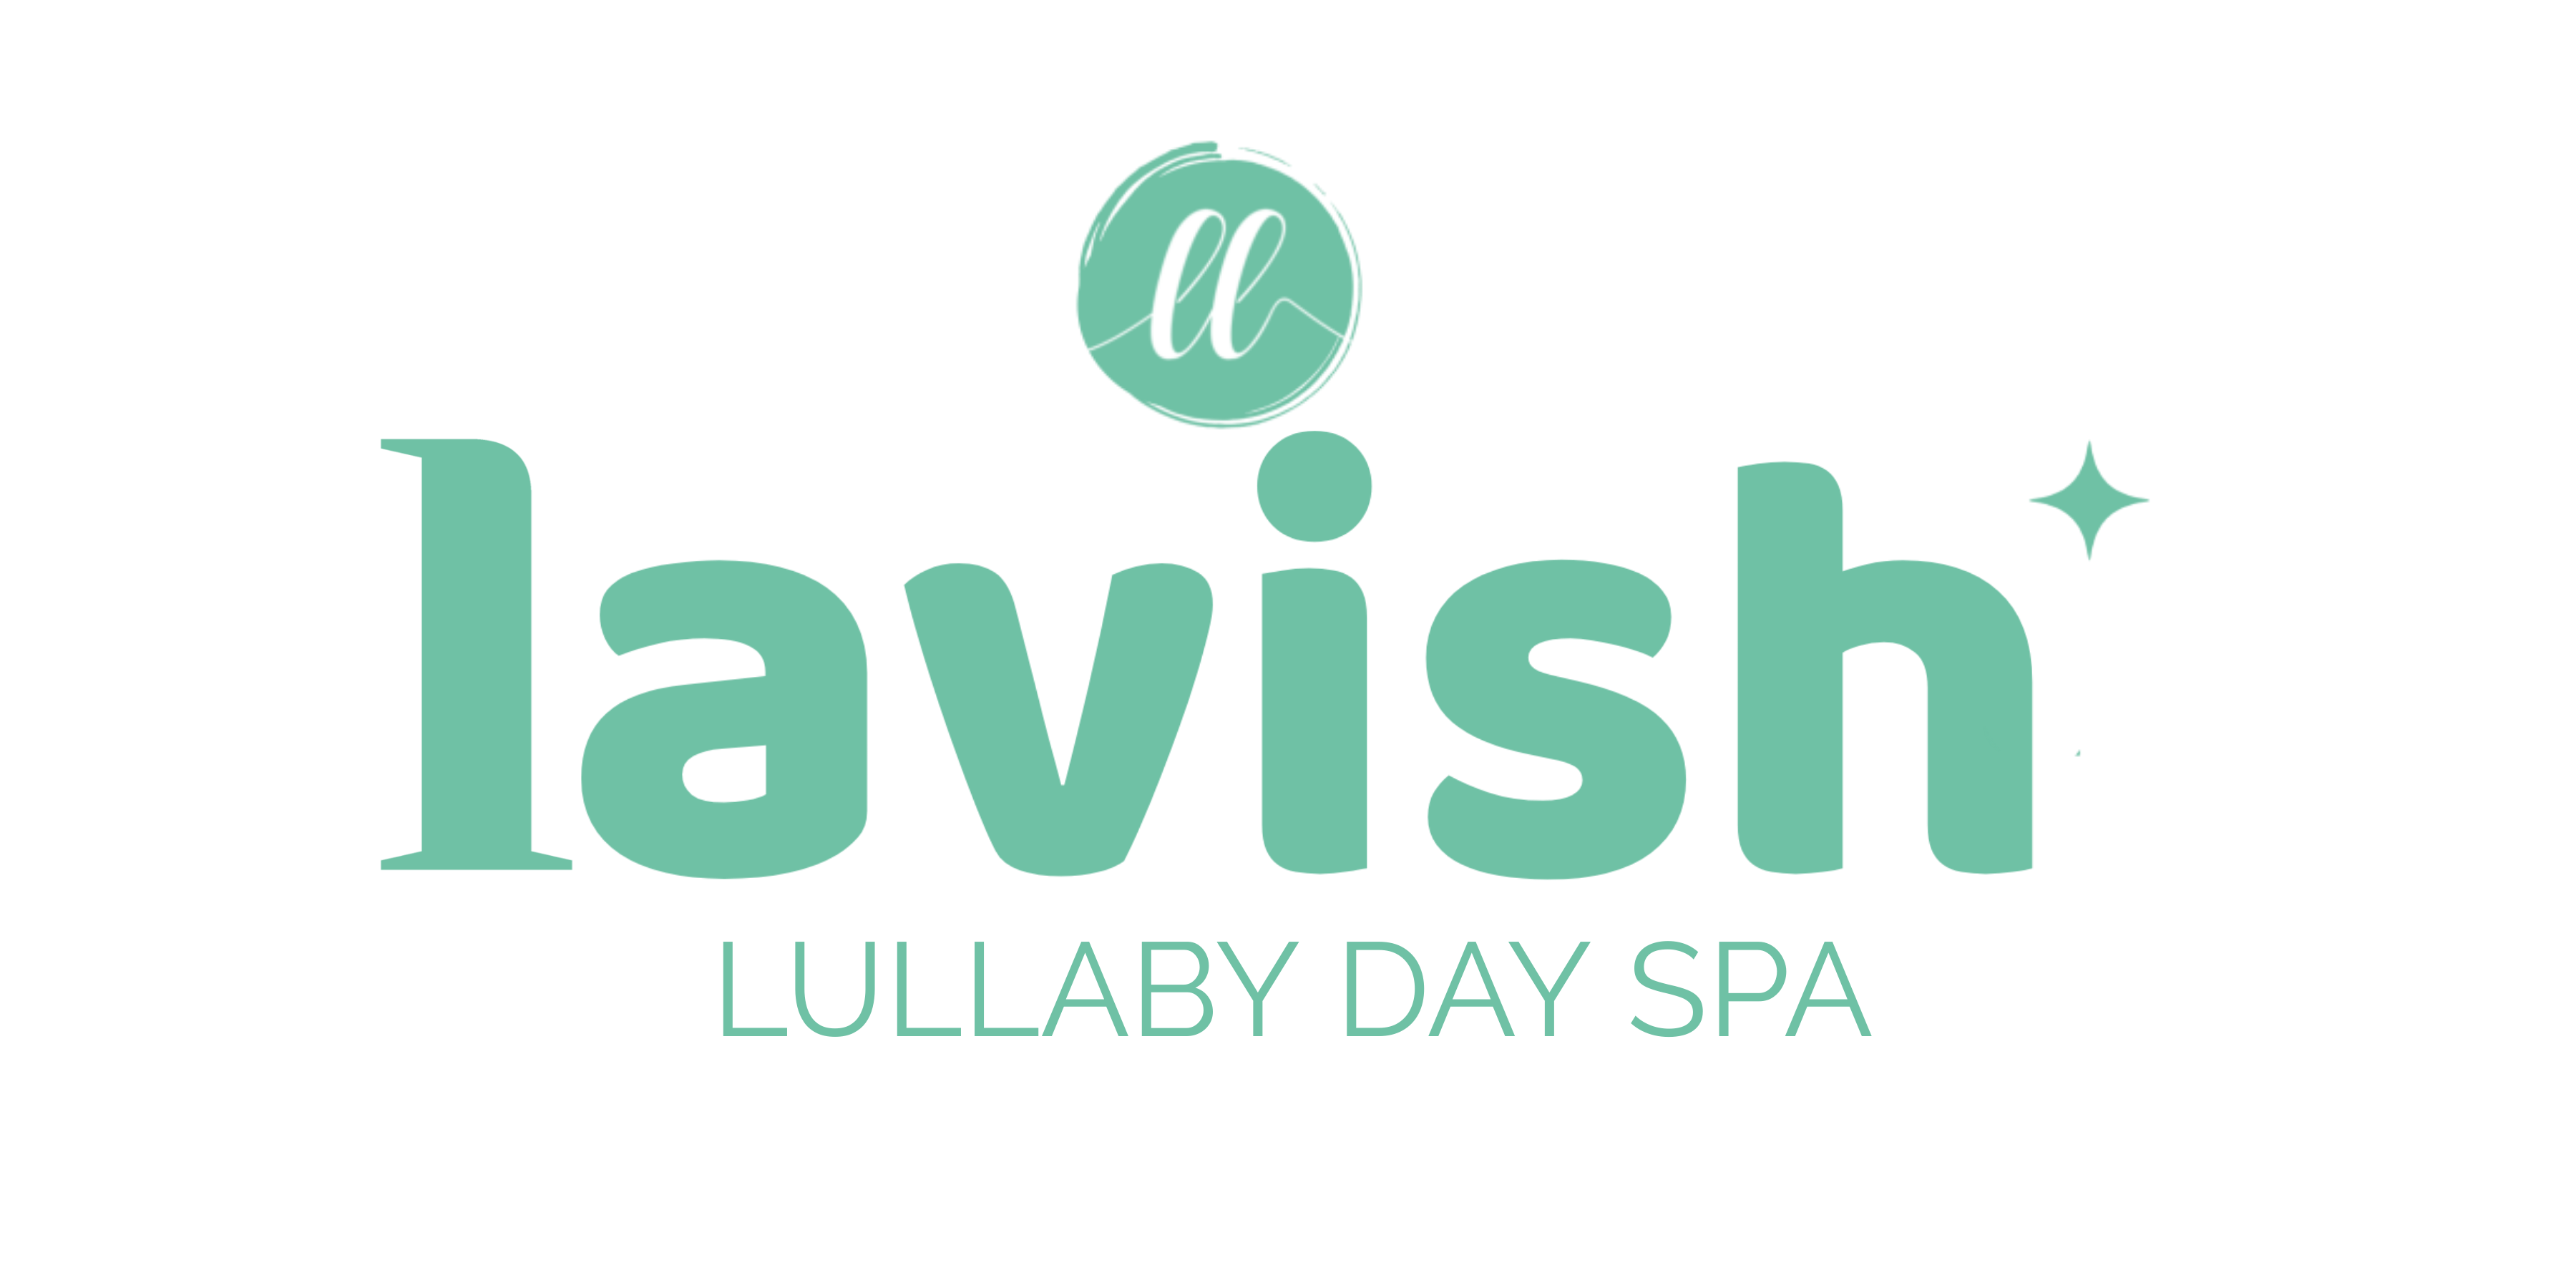 Lavish Lullaby Day Spa